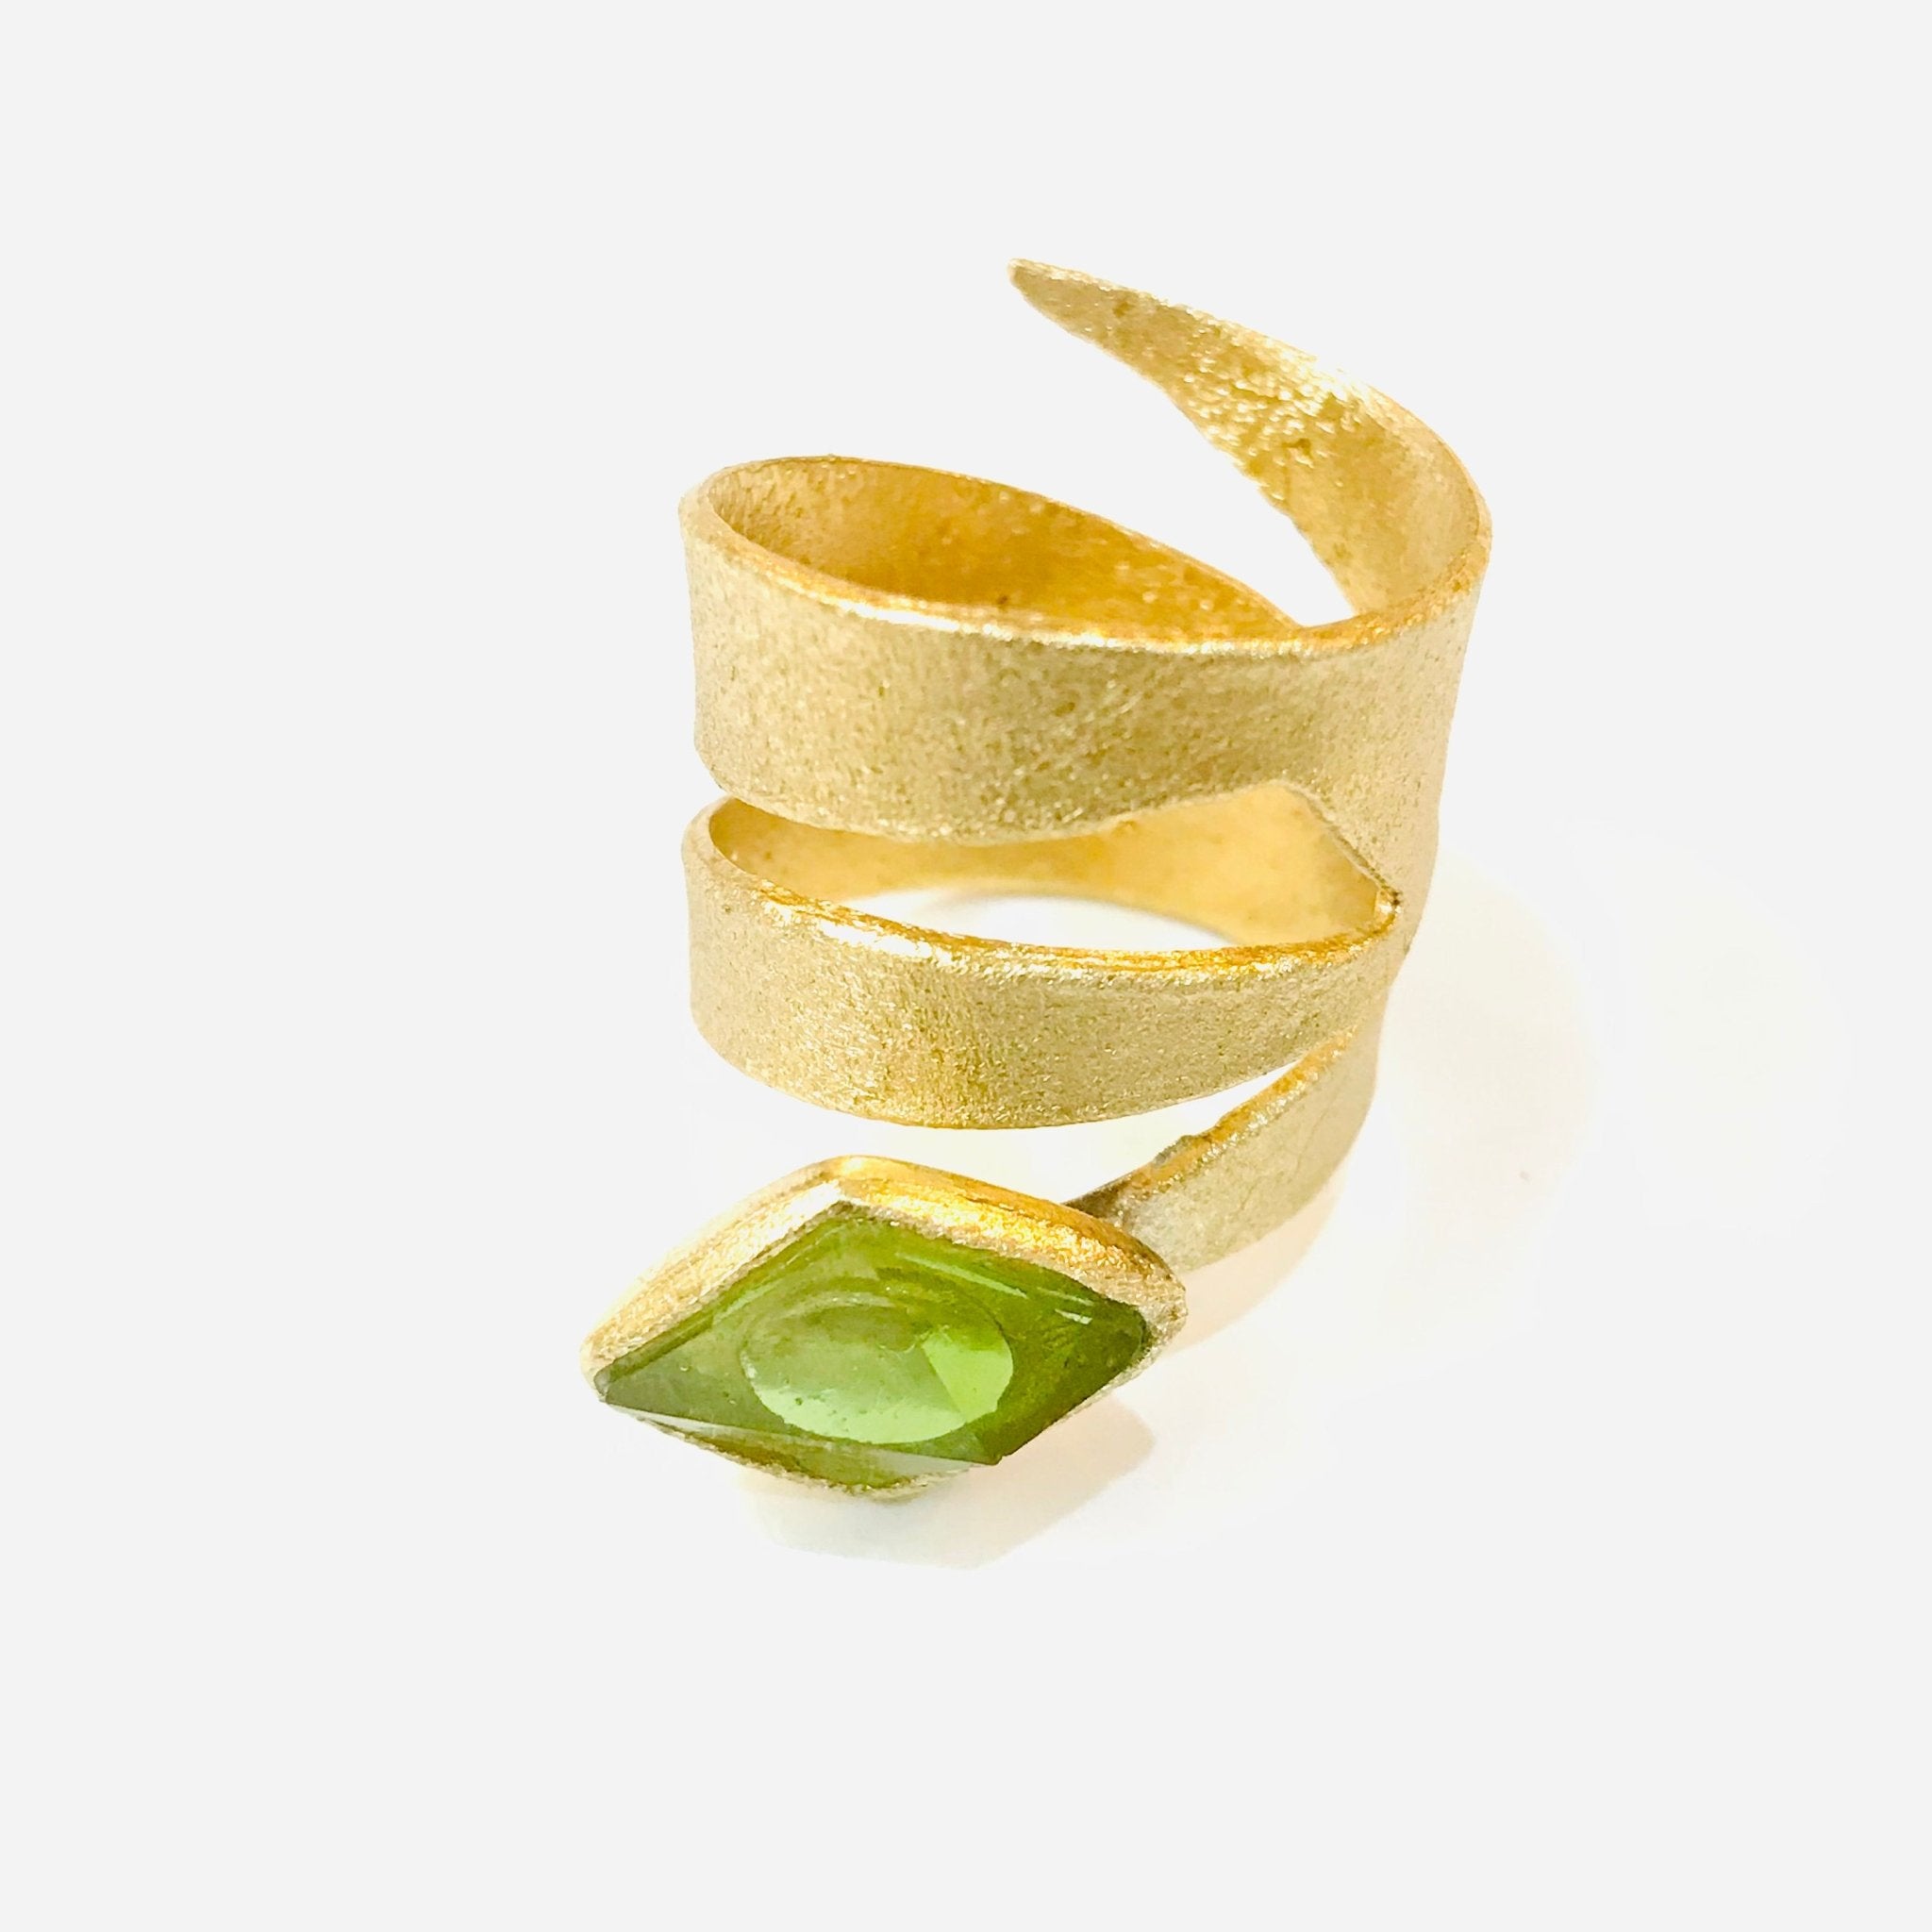 Green Stone Loop Ring - The Nancy Smillie Shop - Art, Jewellery & Designer Gifts Glasgow